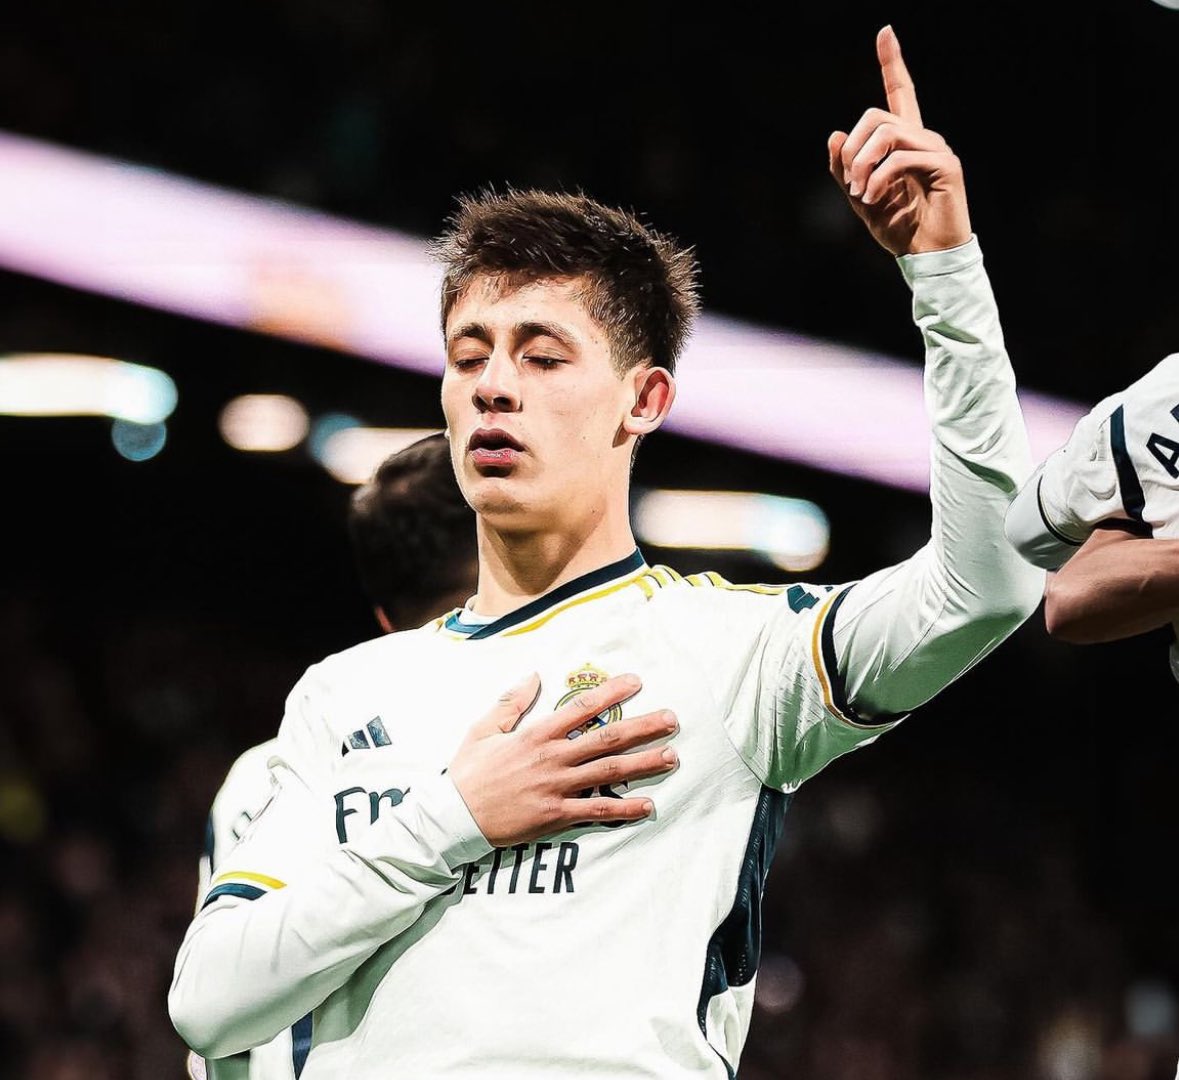 ⚪️🇹🇷 Arda Güler scores again... and it’s four goals in La Liga as Real Madrid player. Three starts, four goals. 🪄